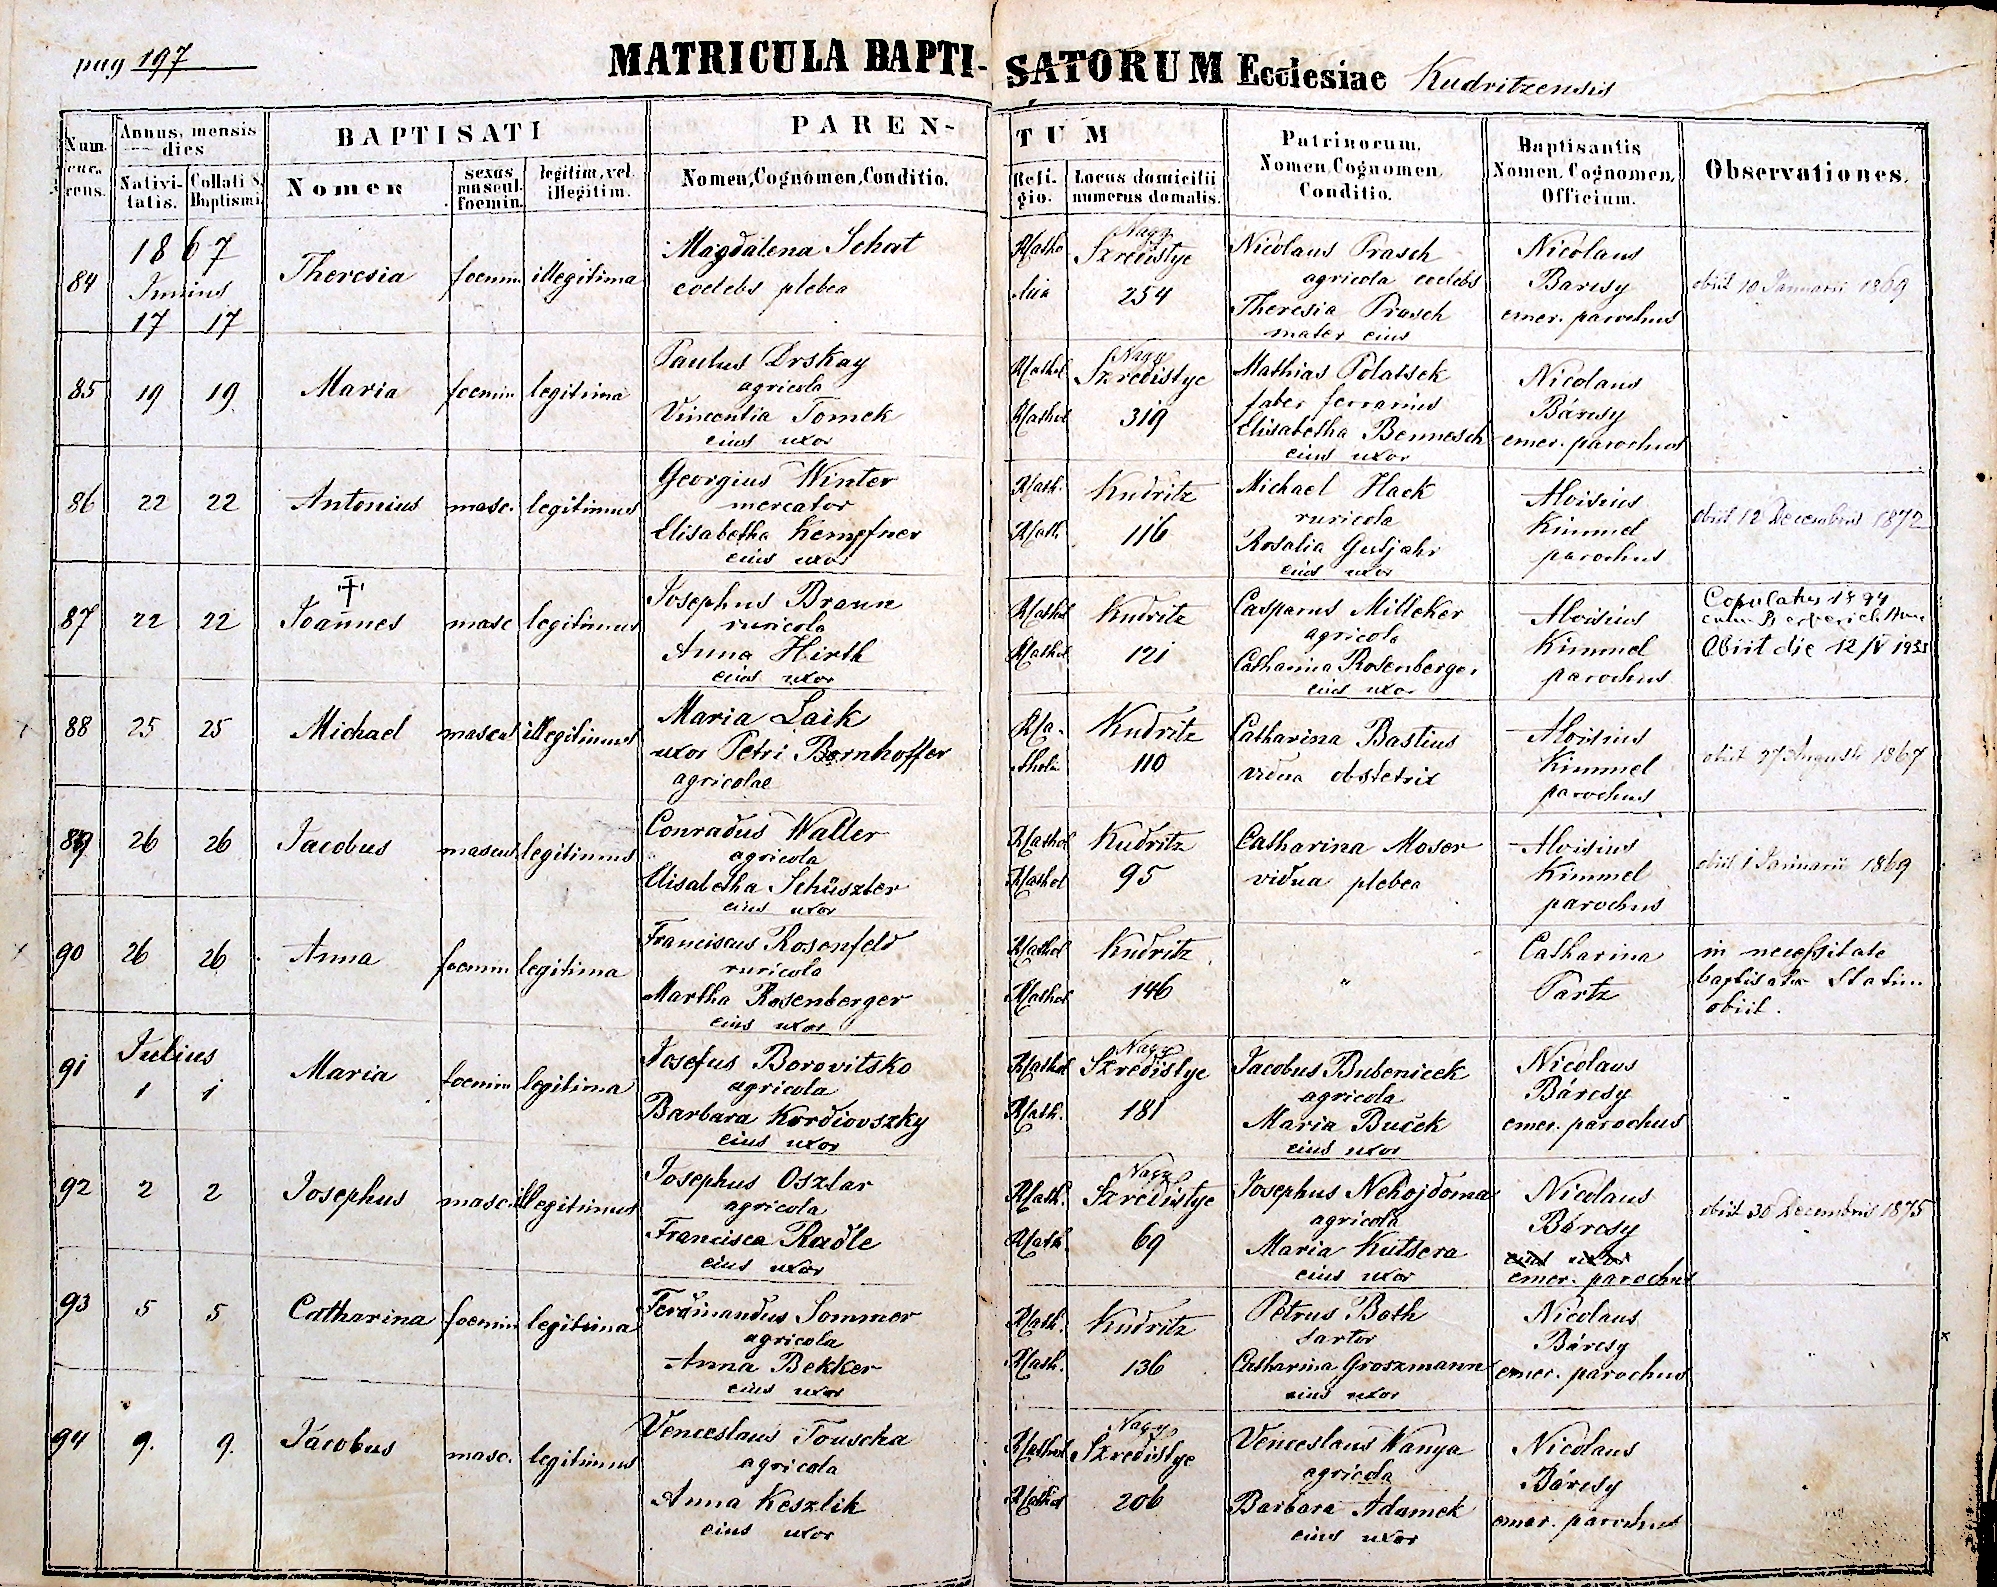 images/church_records/BIRTHS/1852-1870B/197